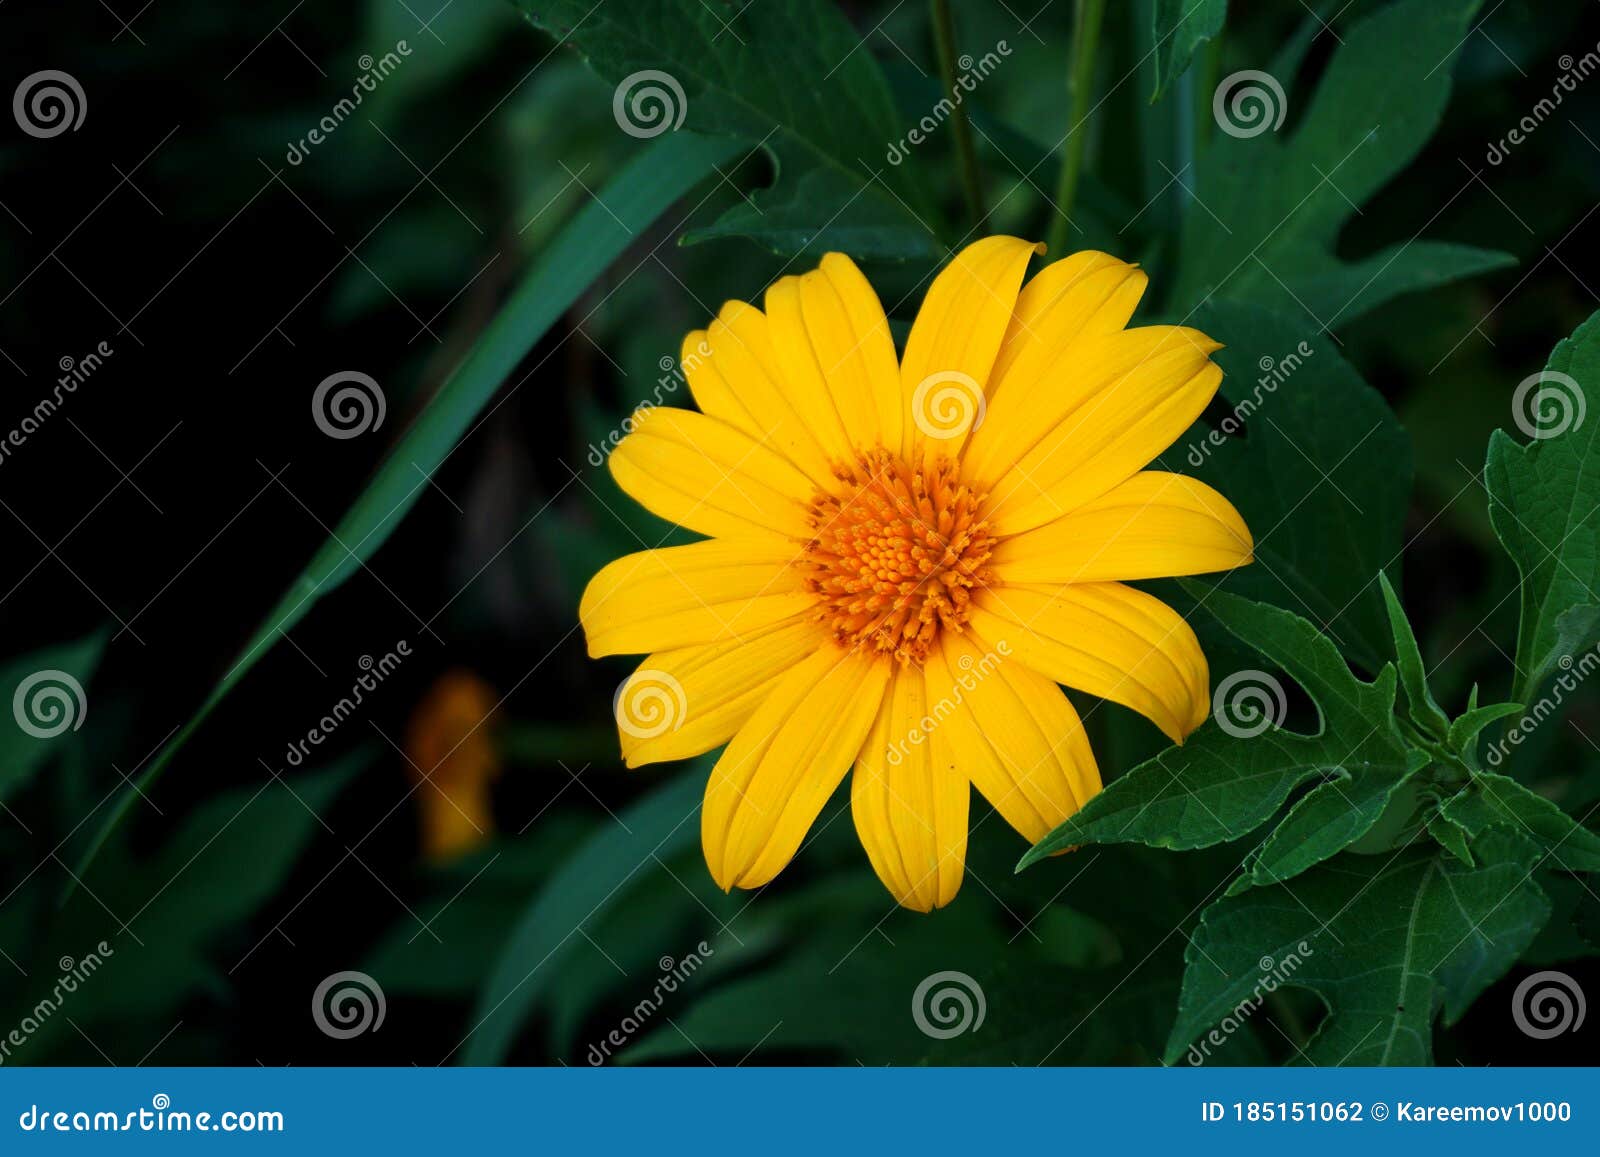 chrysantemum flower in the garden